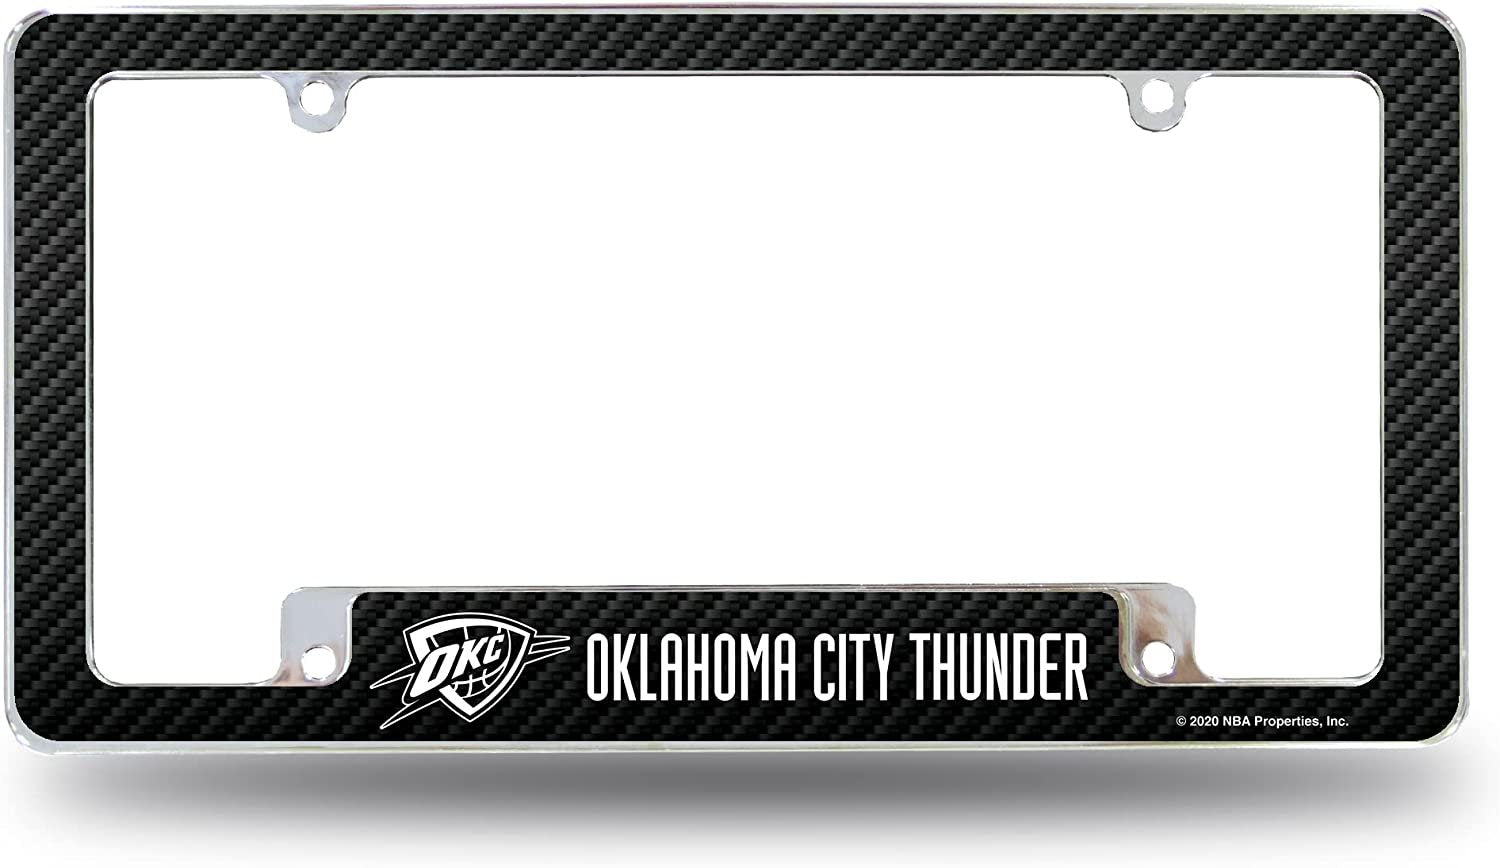 Oklahoma City Thunder Metal License Plate Frame Chrome Tag Cover Carbon Fiber Design 6x12 Inch